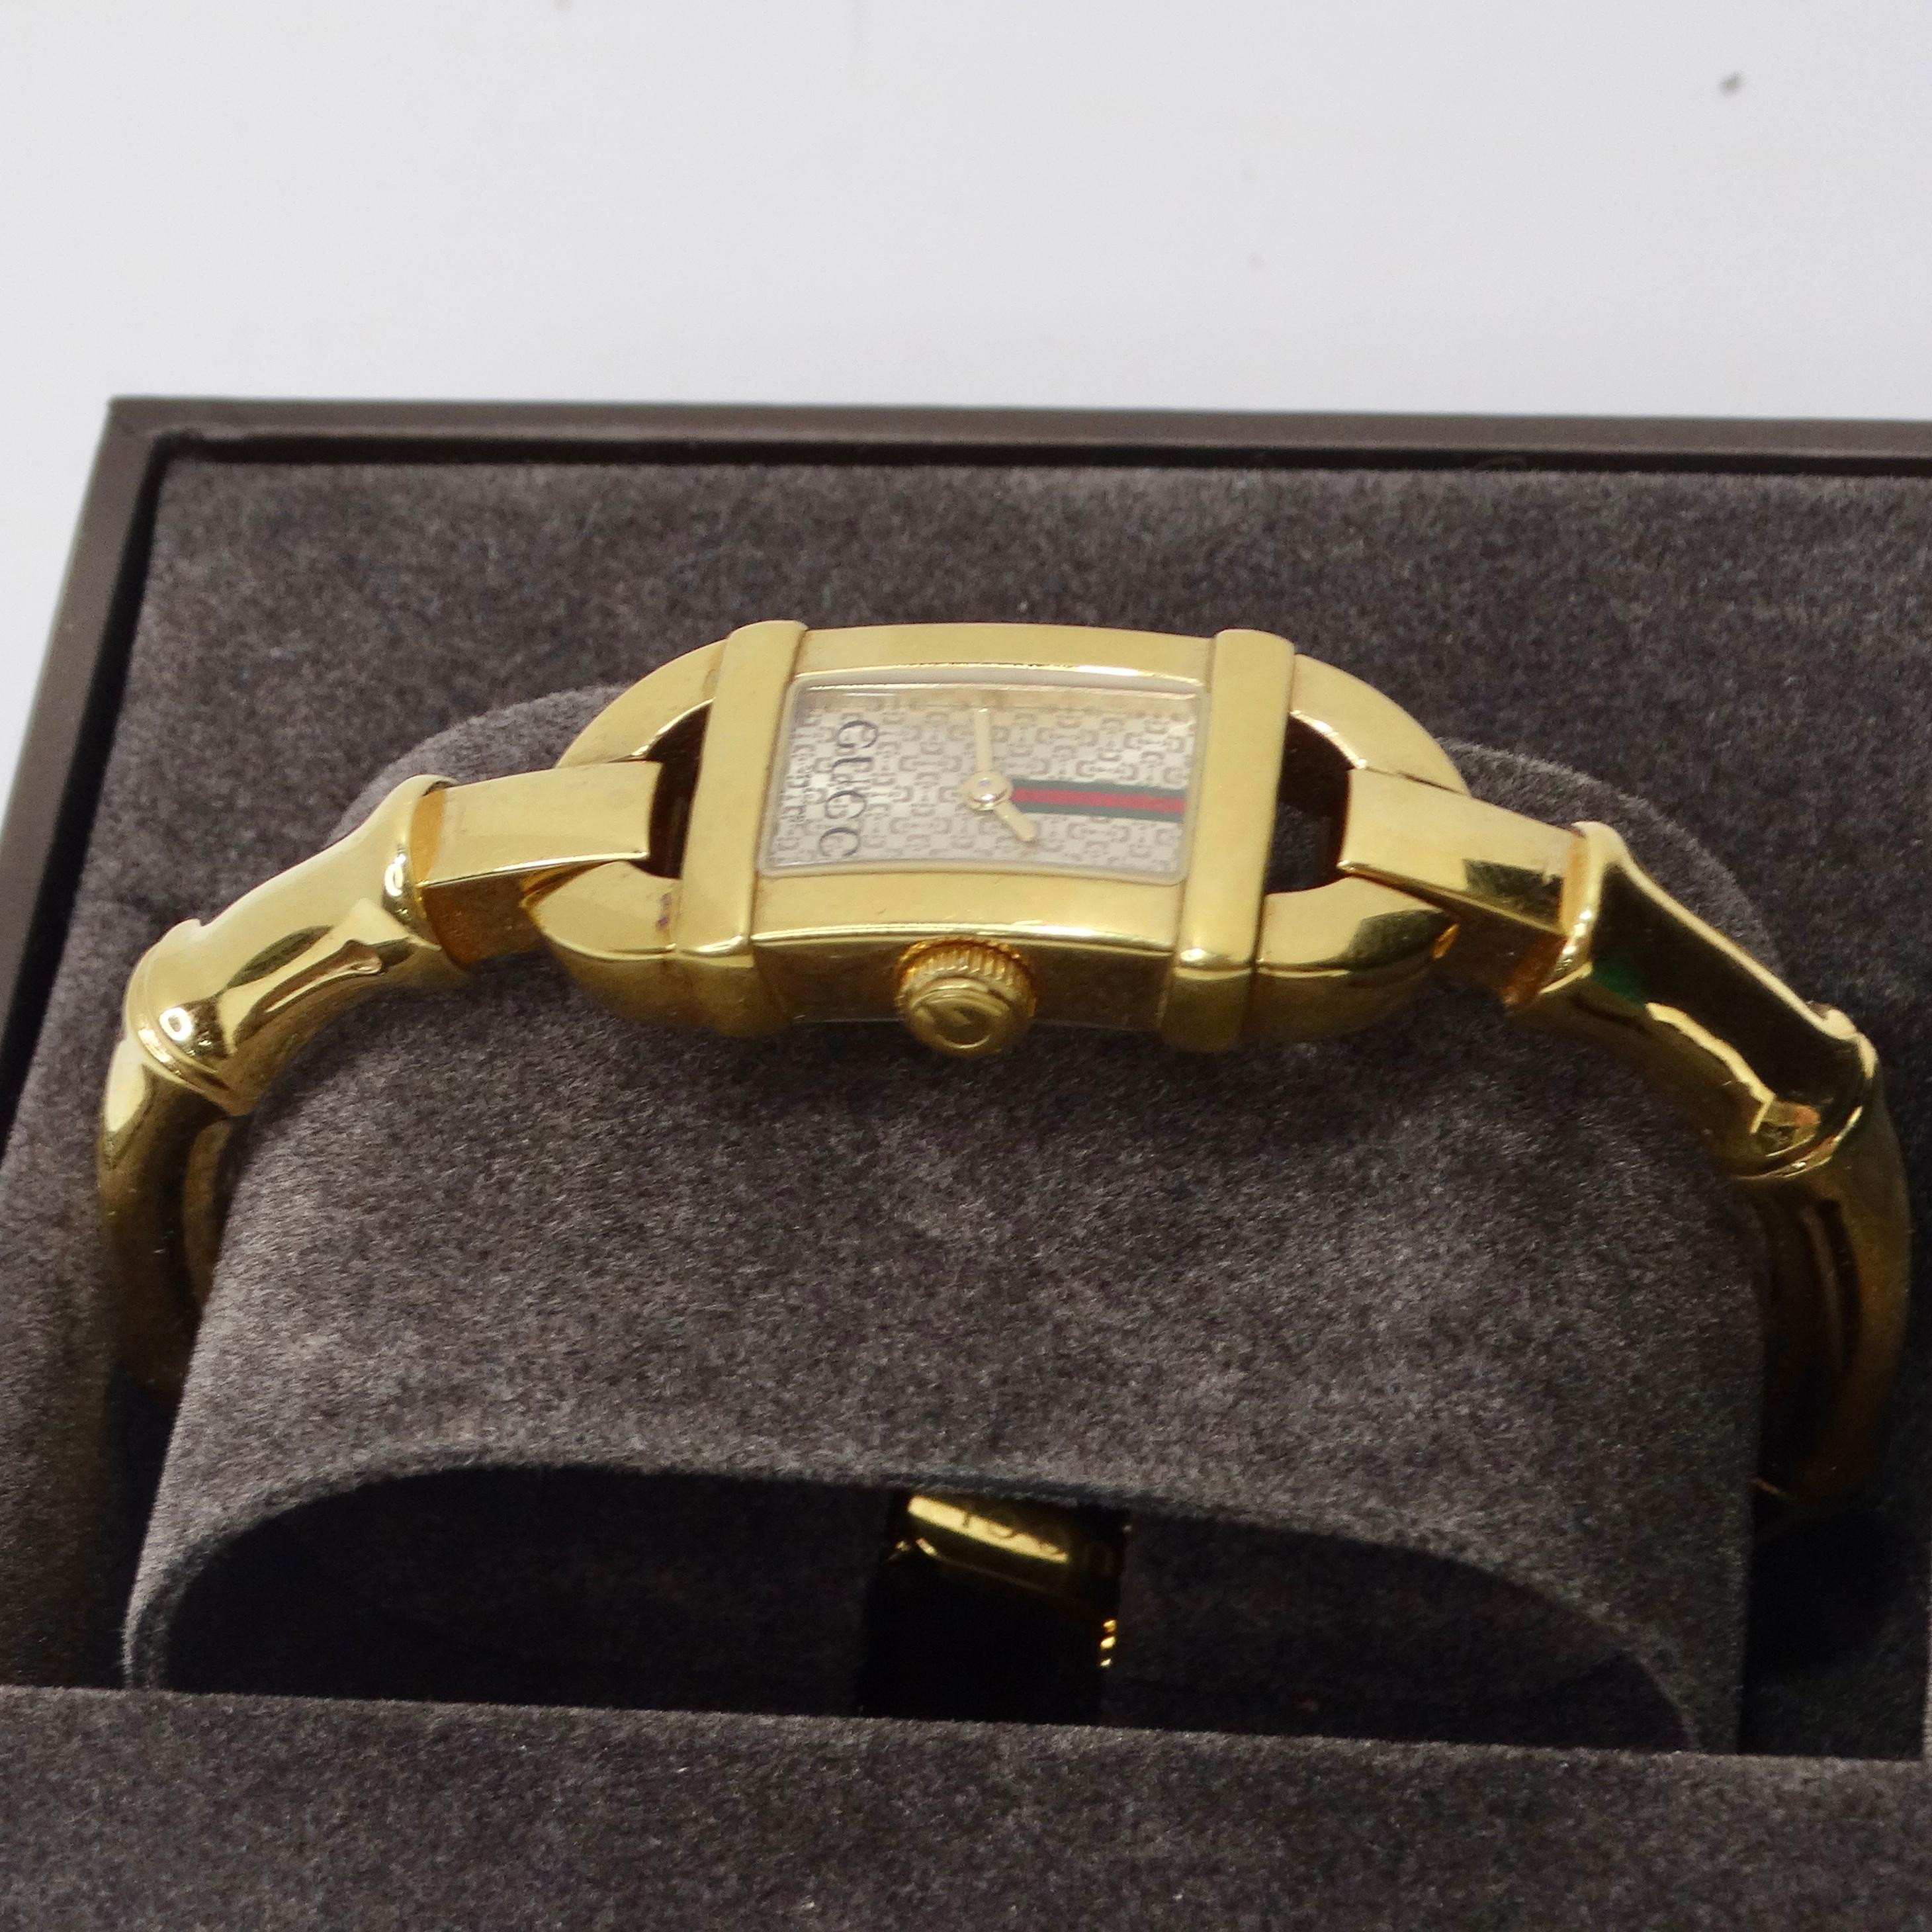 gucci 6800l watch price